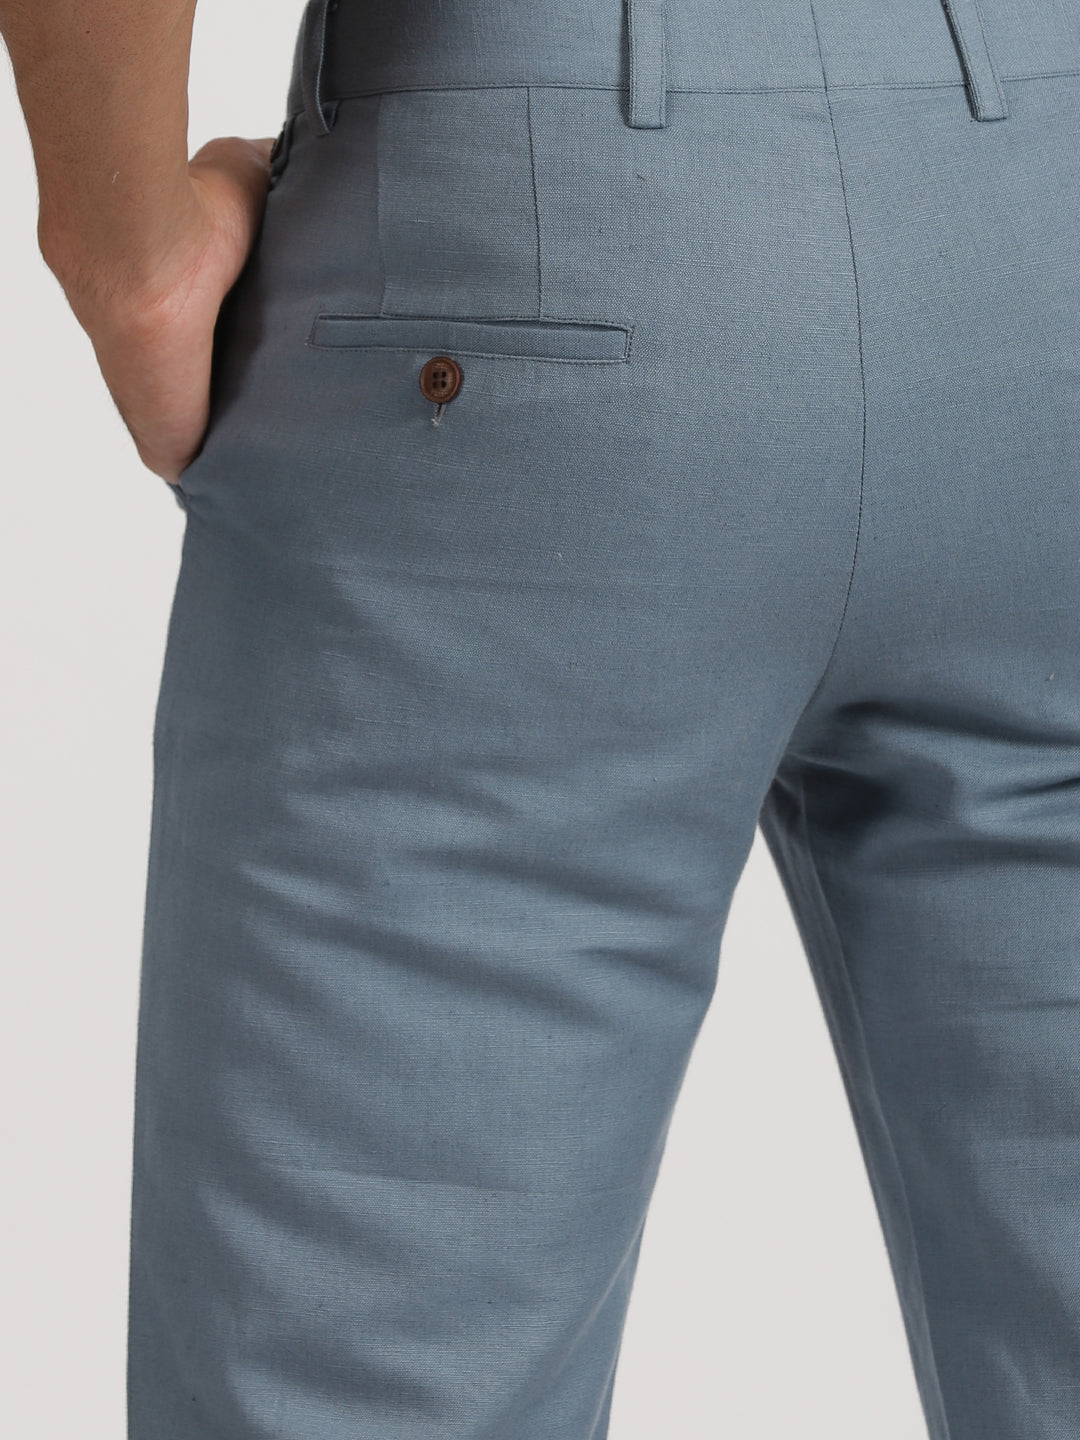 Ian Chino Pants - Men's Linen Trousers - Teal Blue